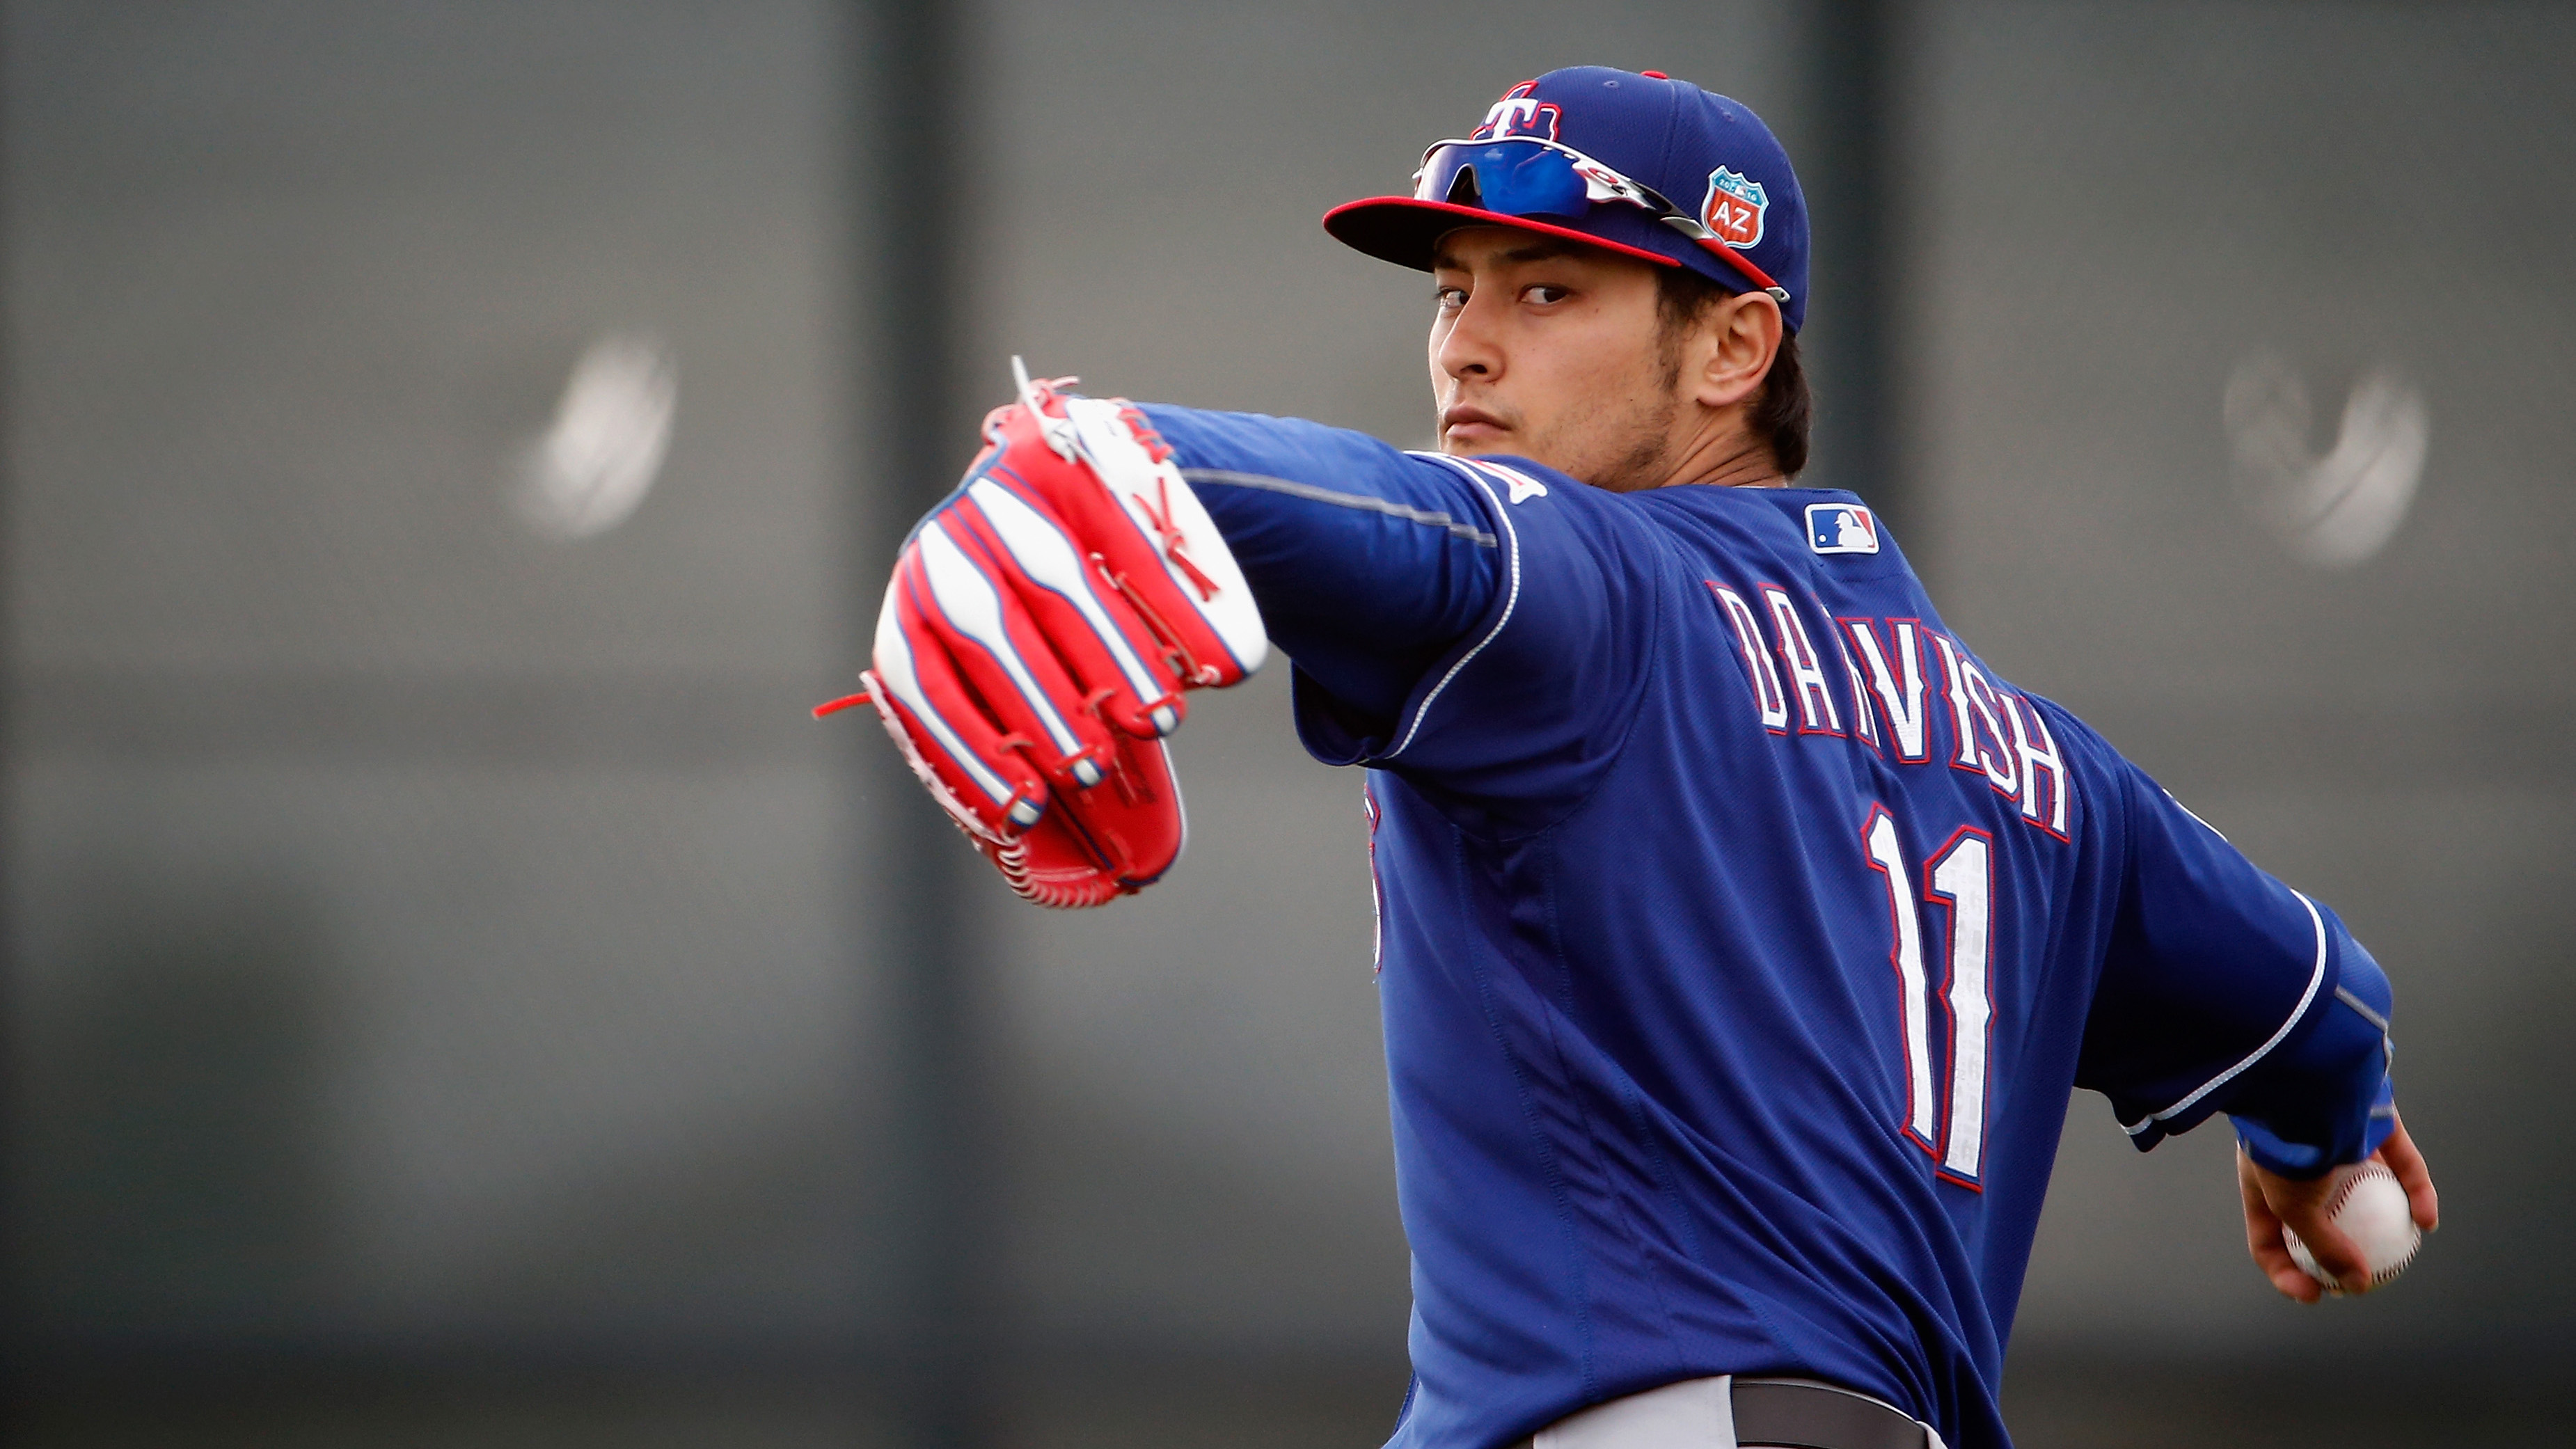 Rangers' Yu Darvish anxious to return, take next step in rehab process